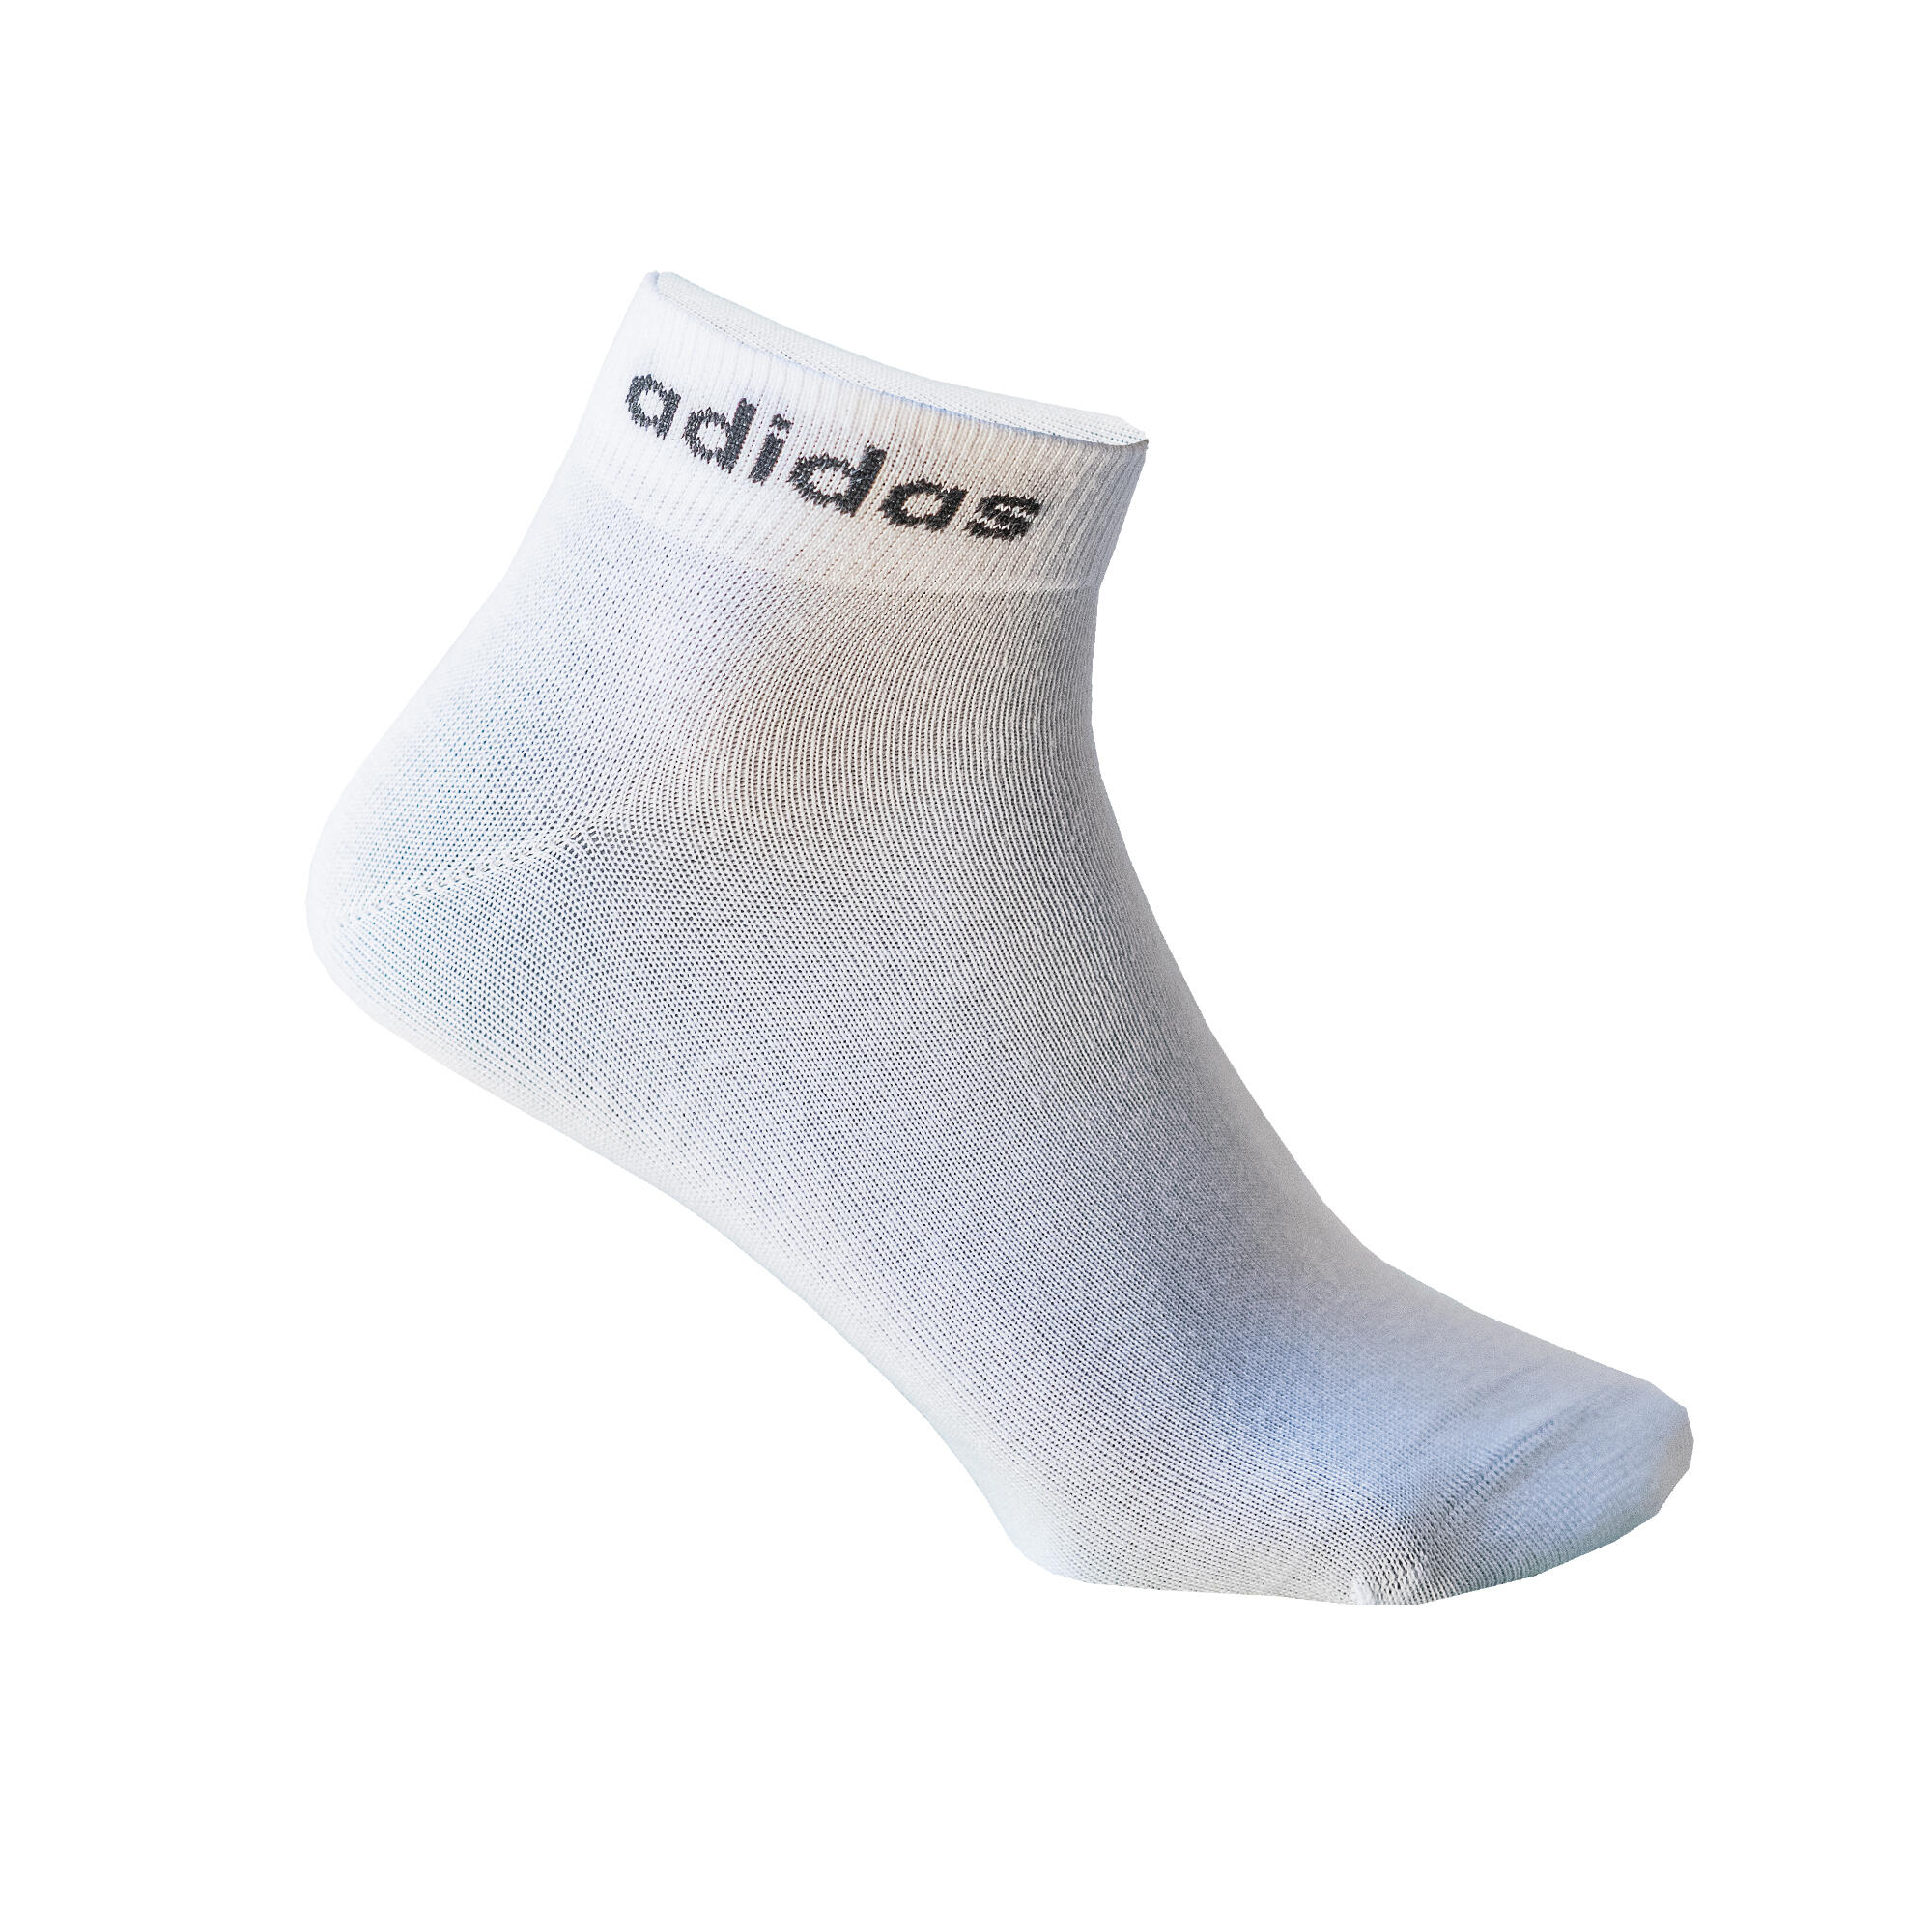 Mid Sports Socks Tri-Pack - Black/White/Grey 4/8